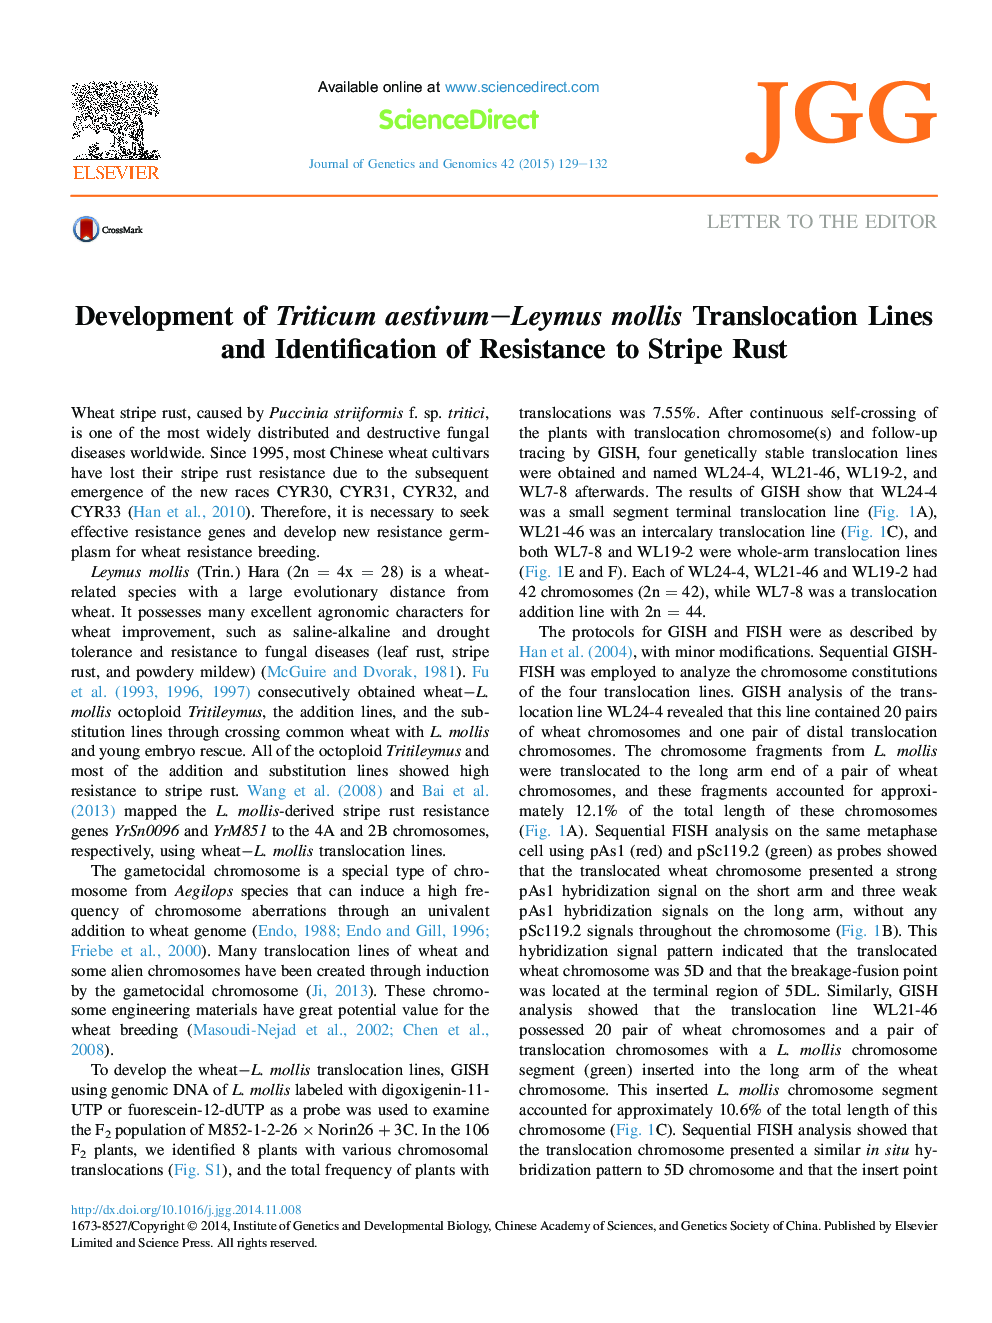 Development of Triticum aestivum-Leymus mollis Translocation Lines and Identification of Resistance to Stripe Rust